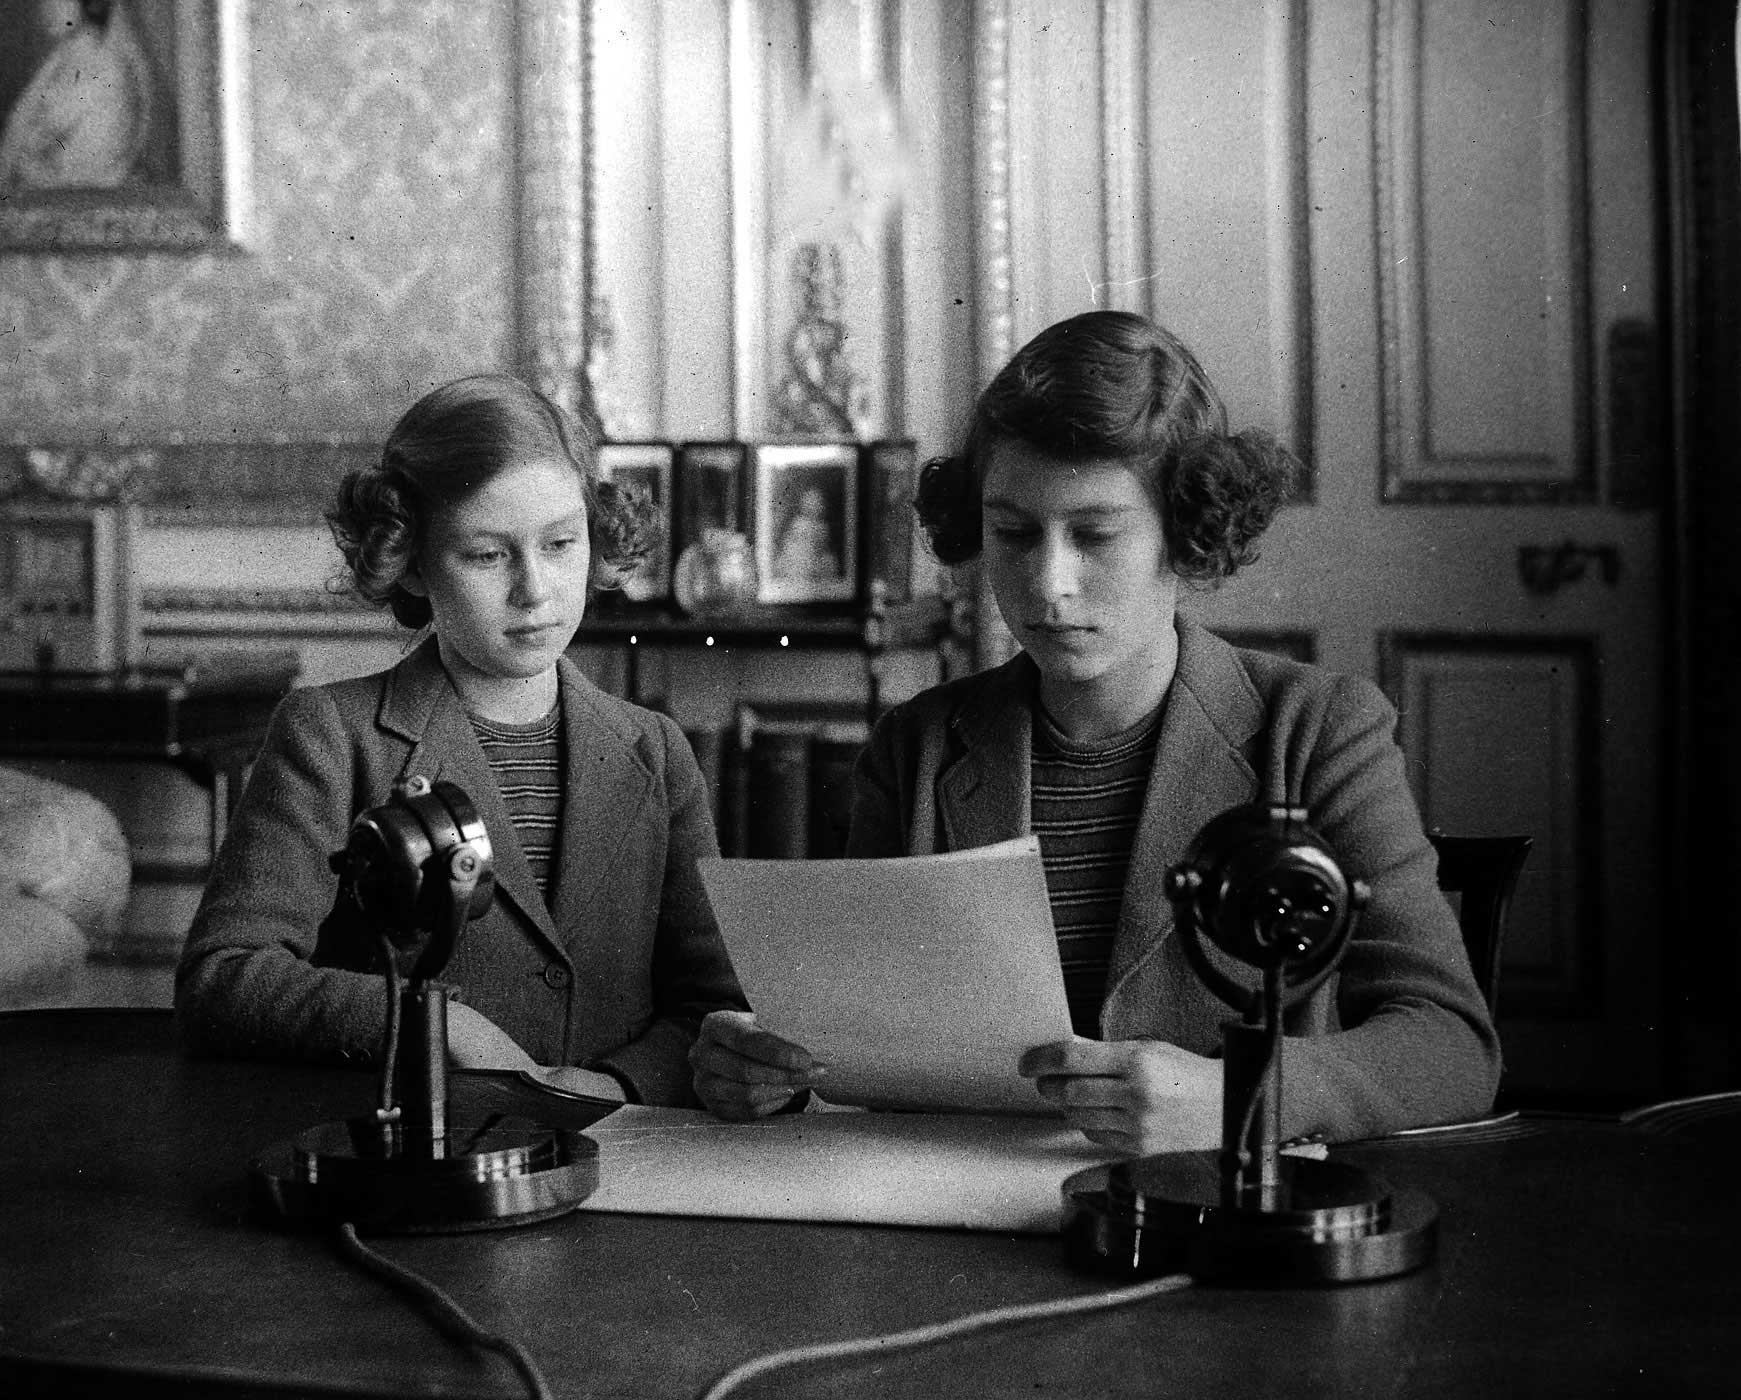 British Royalty, 1940, Princess Elizabeth (later Queen Elizabeth II), right, broadcasting with her sister Princess Margaret alongside